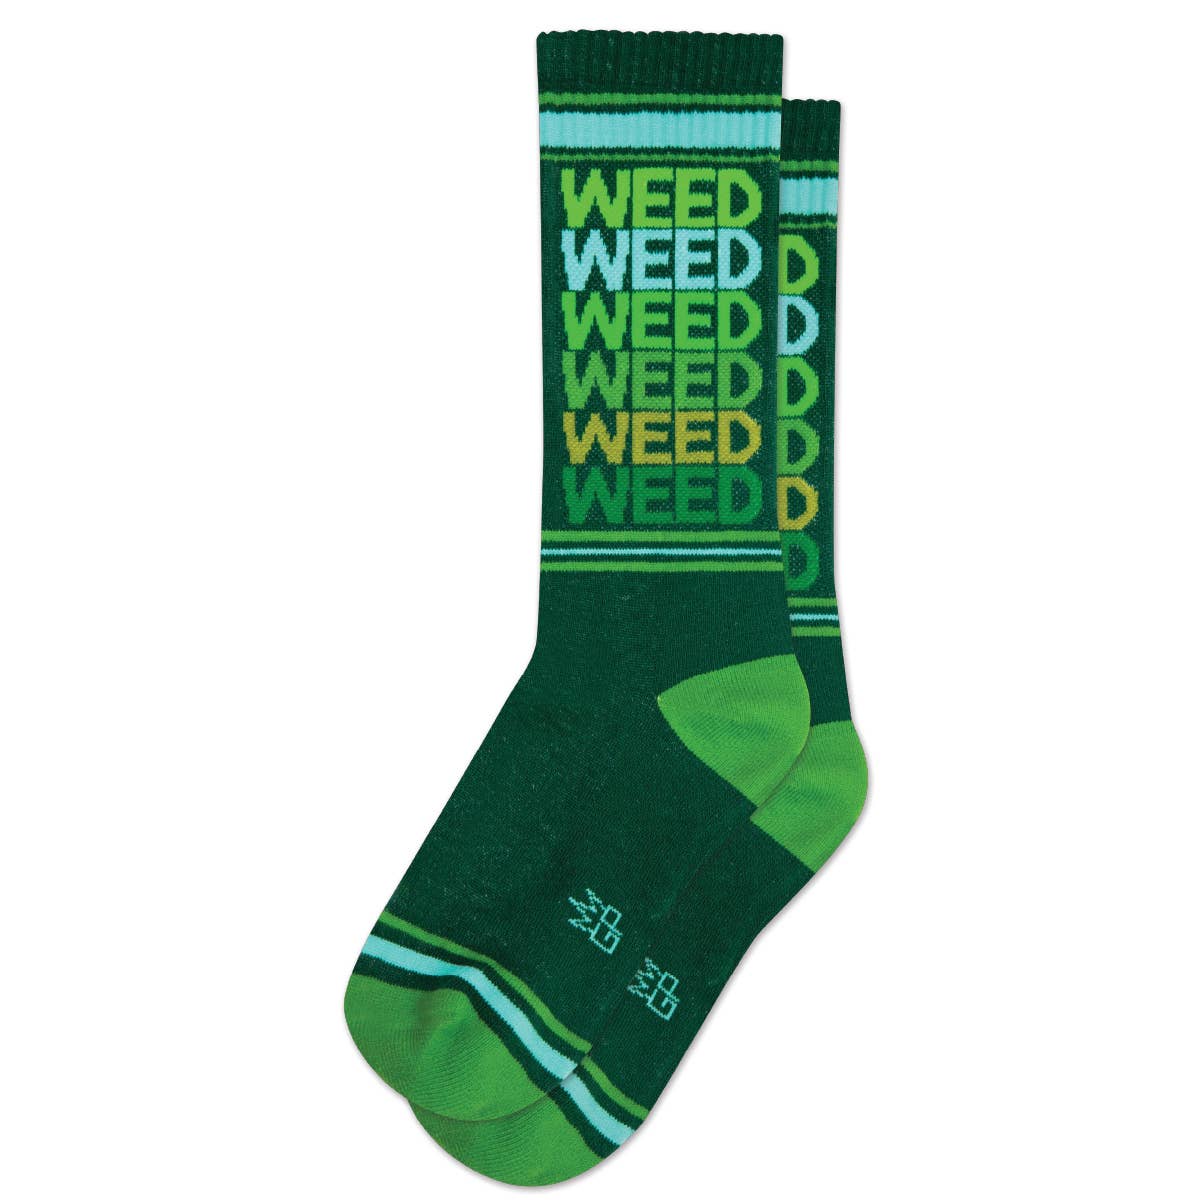 Socks - WEED